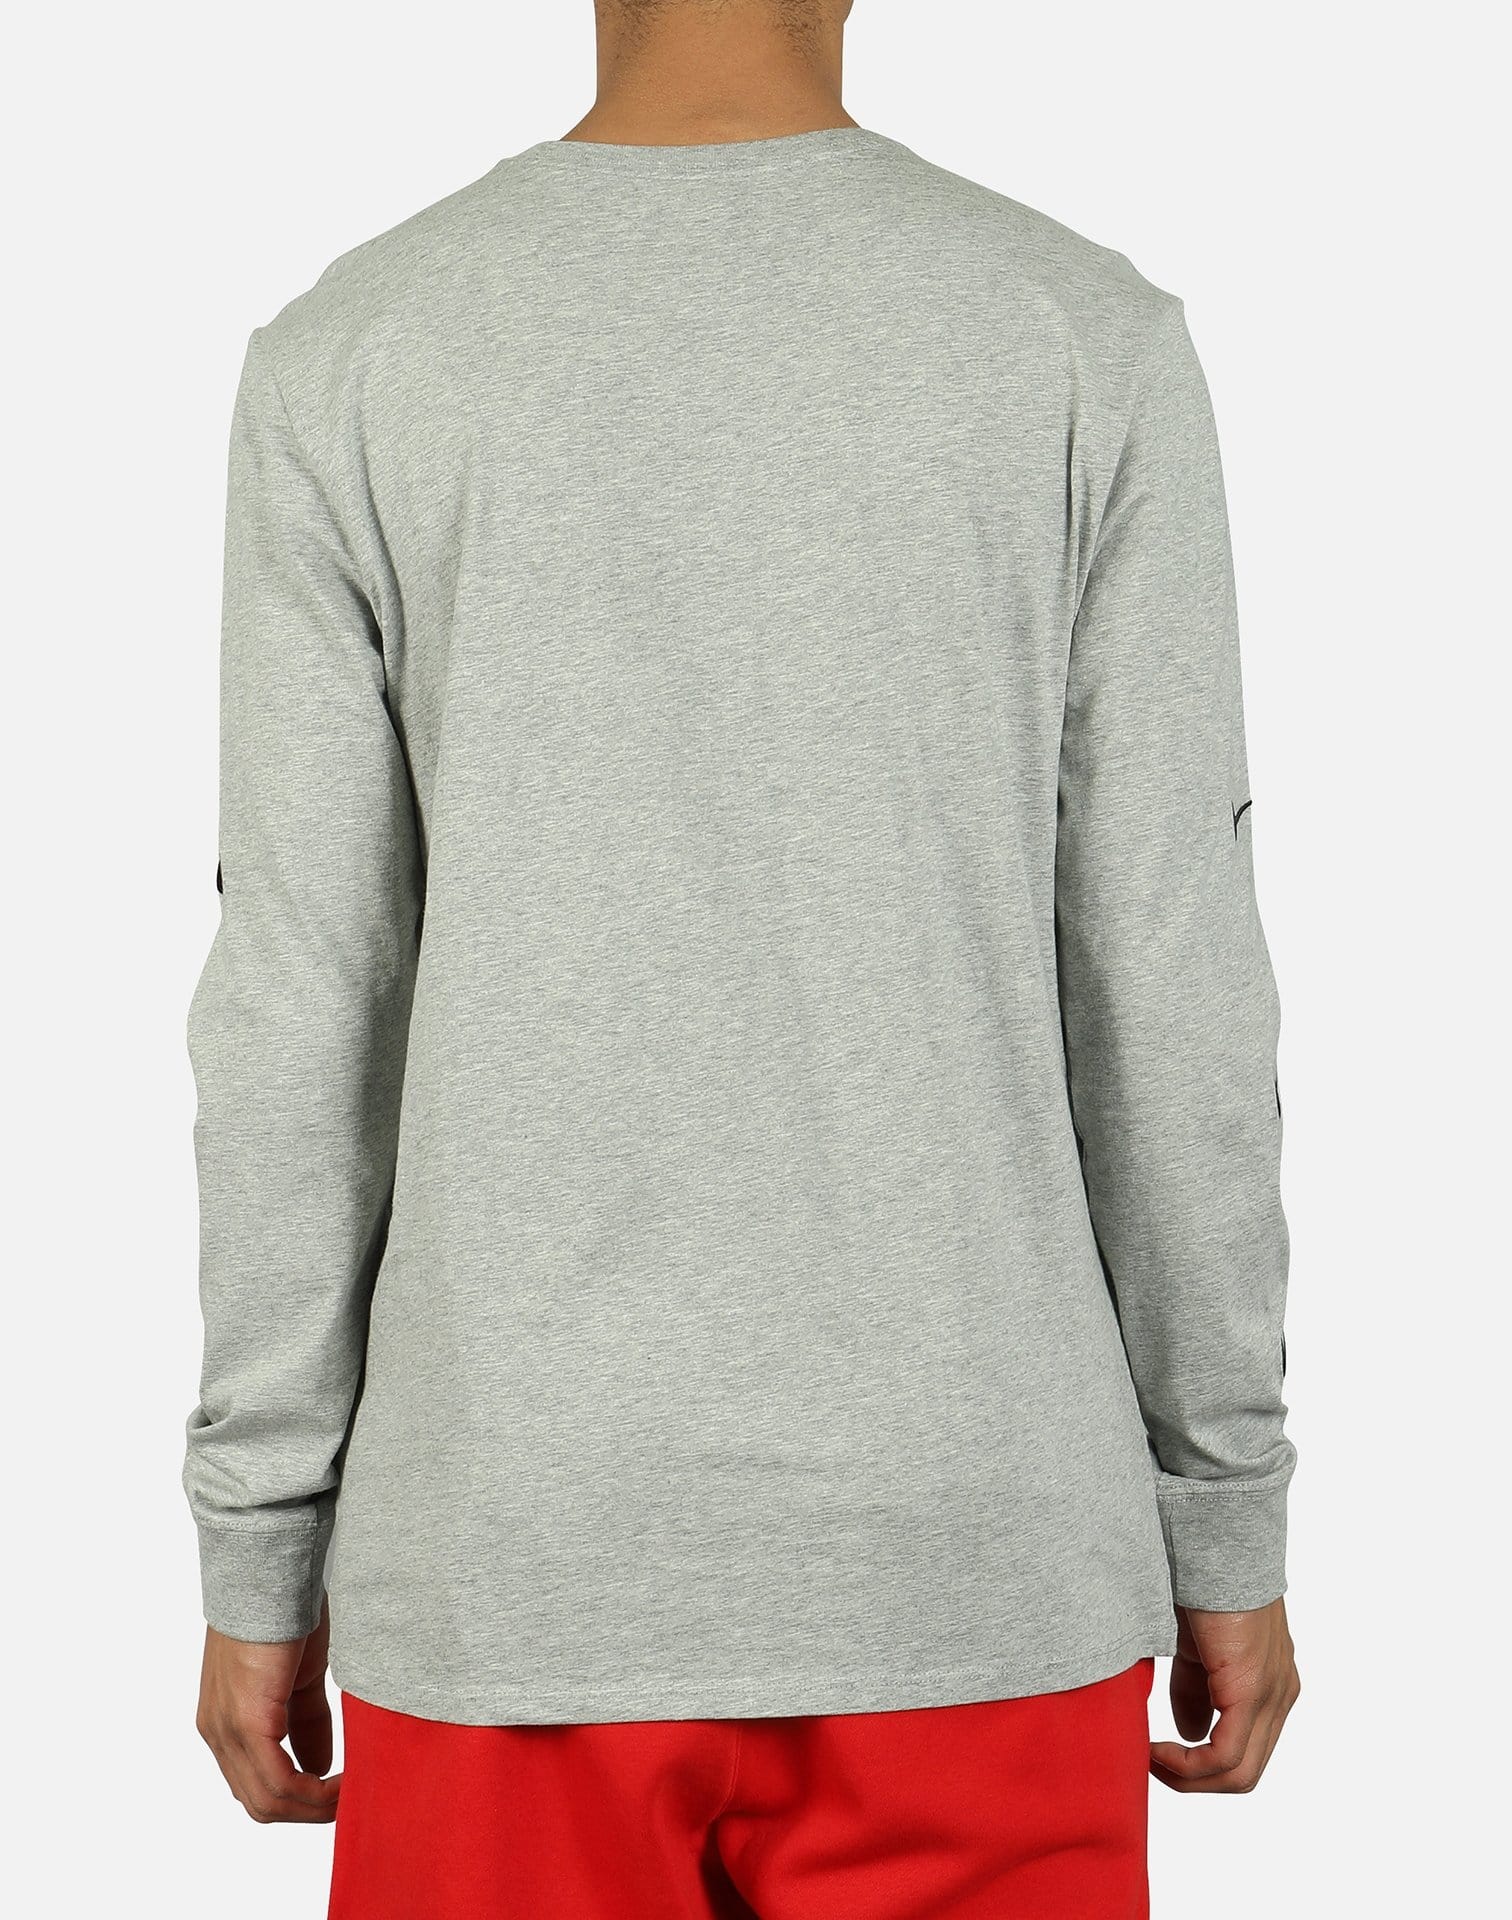 Nike Men's JDI Stack Sleeve Long-Sleeve Shirt